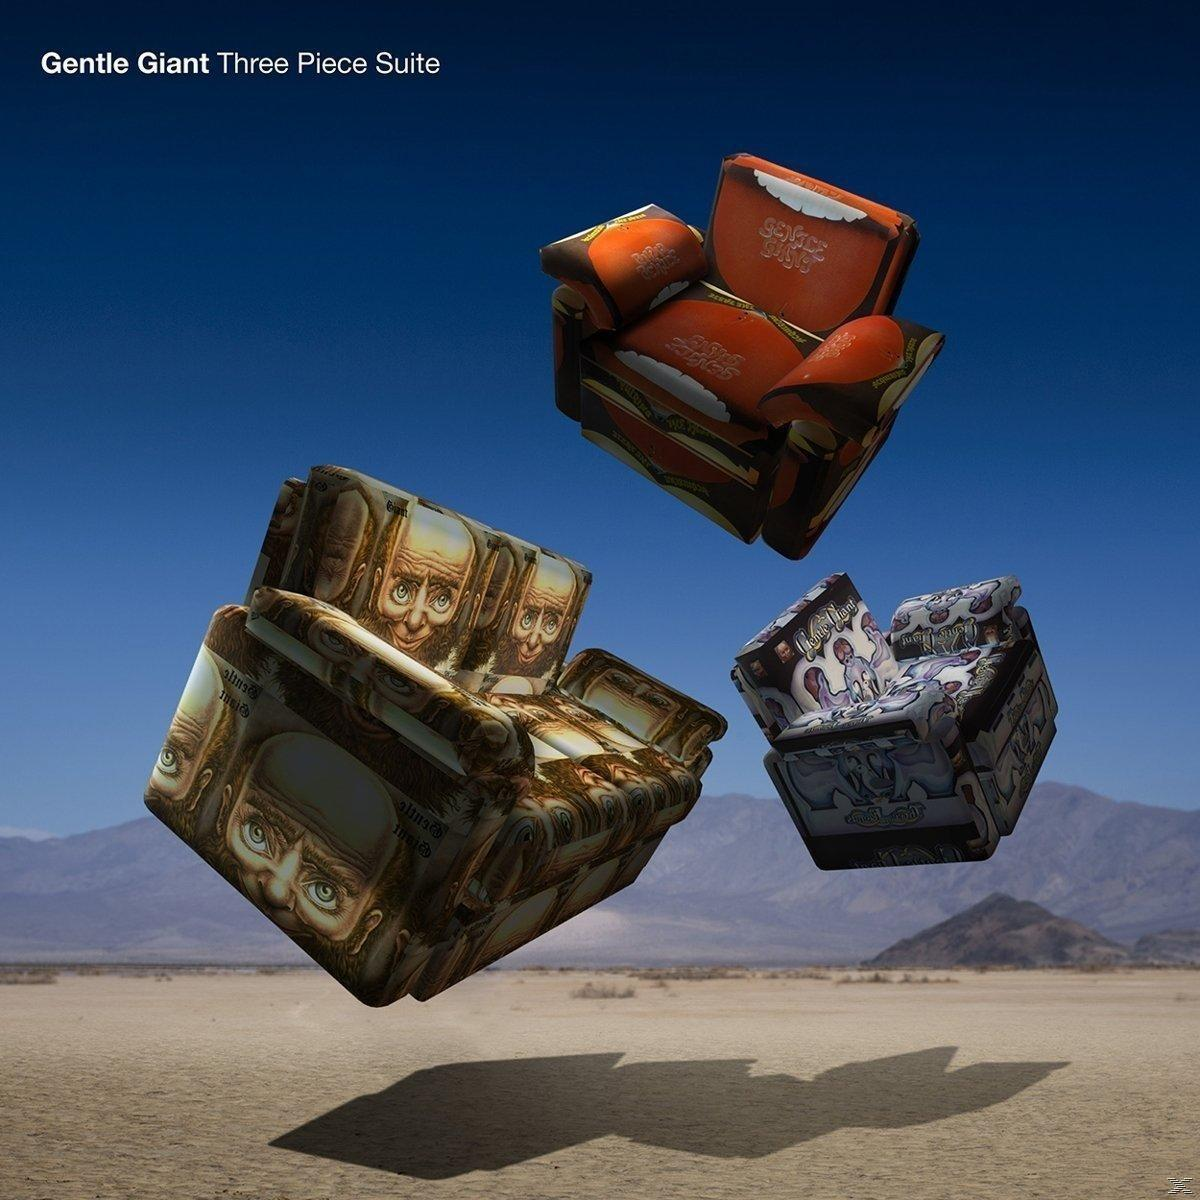 Gentle Giant - Piece (Steven (Vinyl) - Gatefold Suite Wilson Mix/180g Three